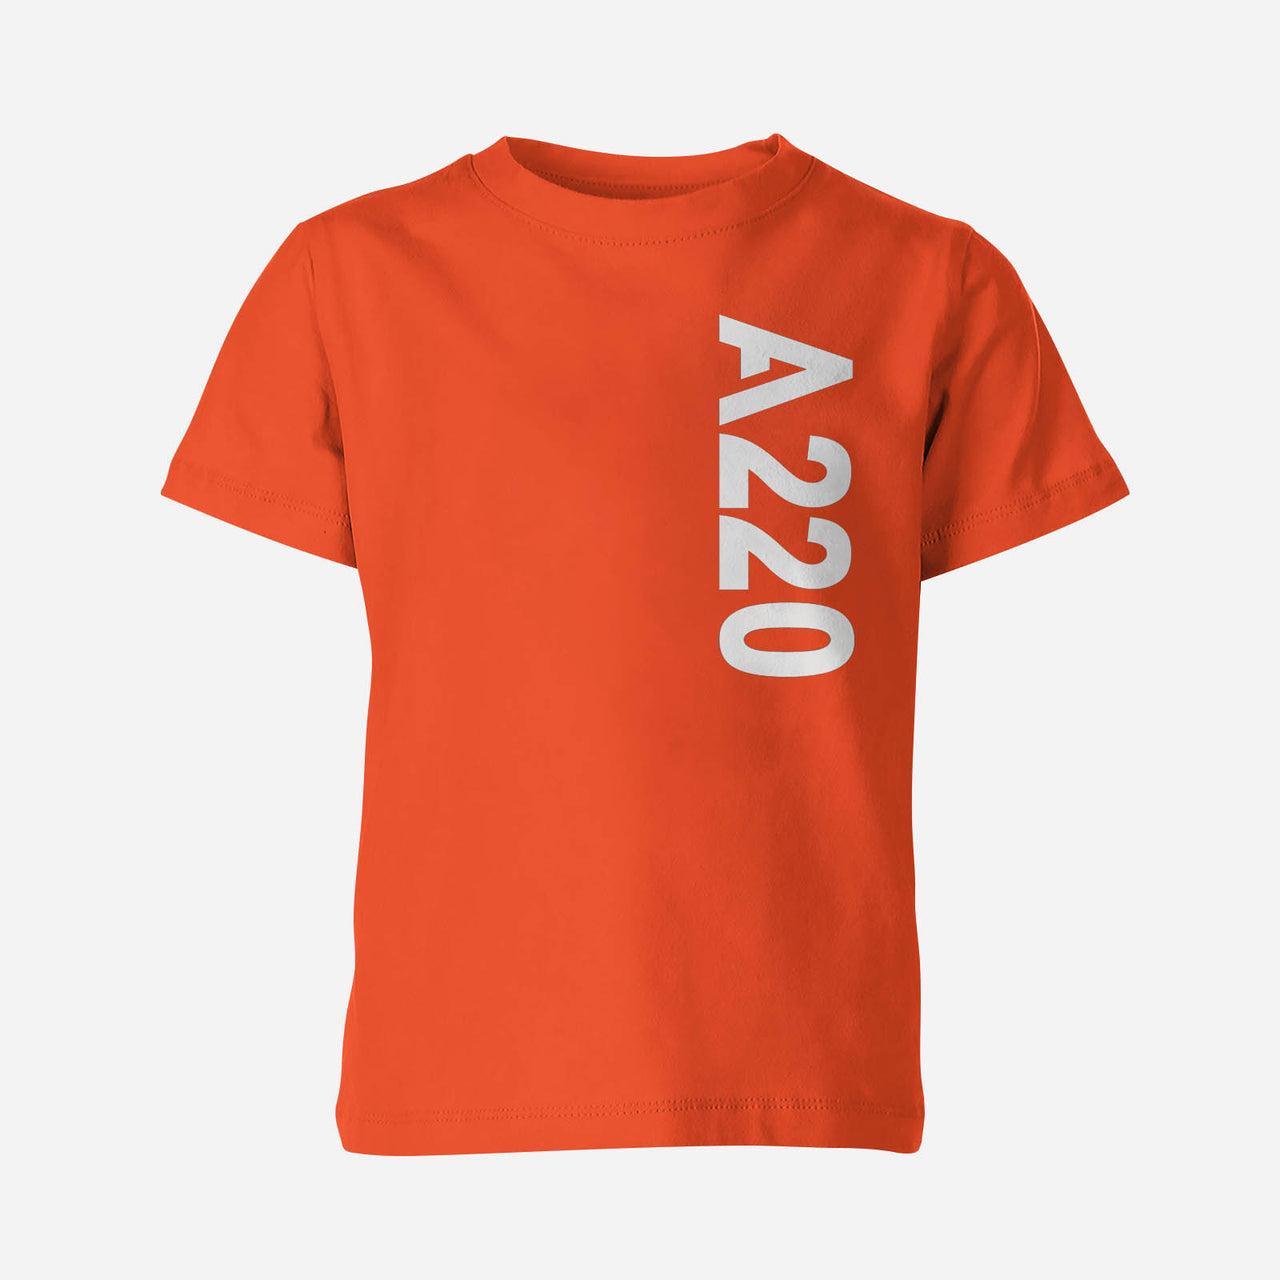 A220 Side Text Designed Children T-Shirts